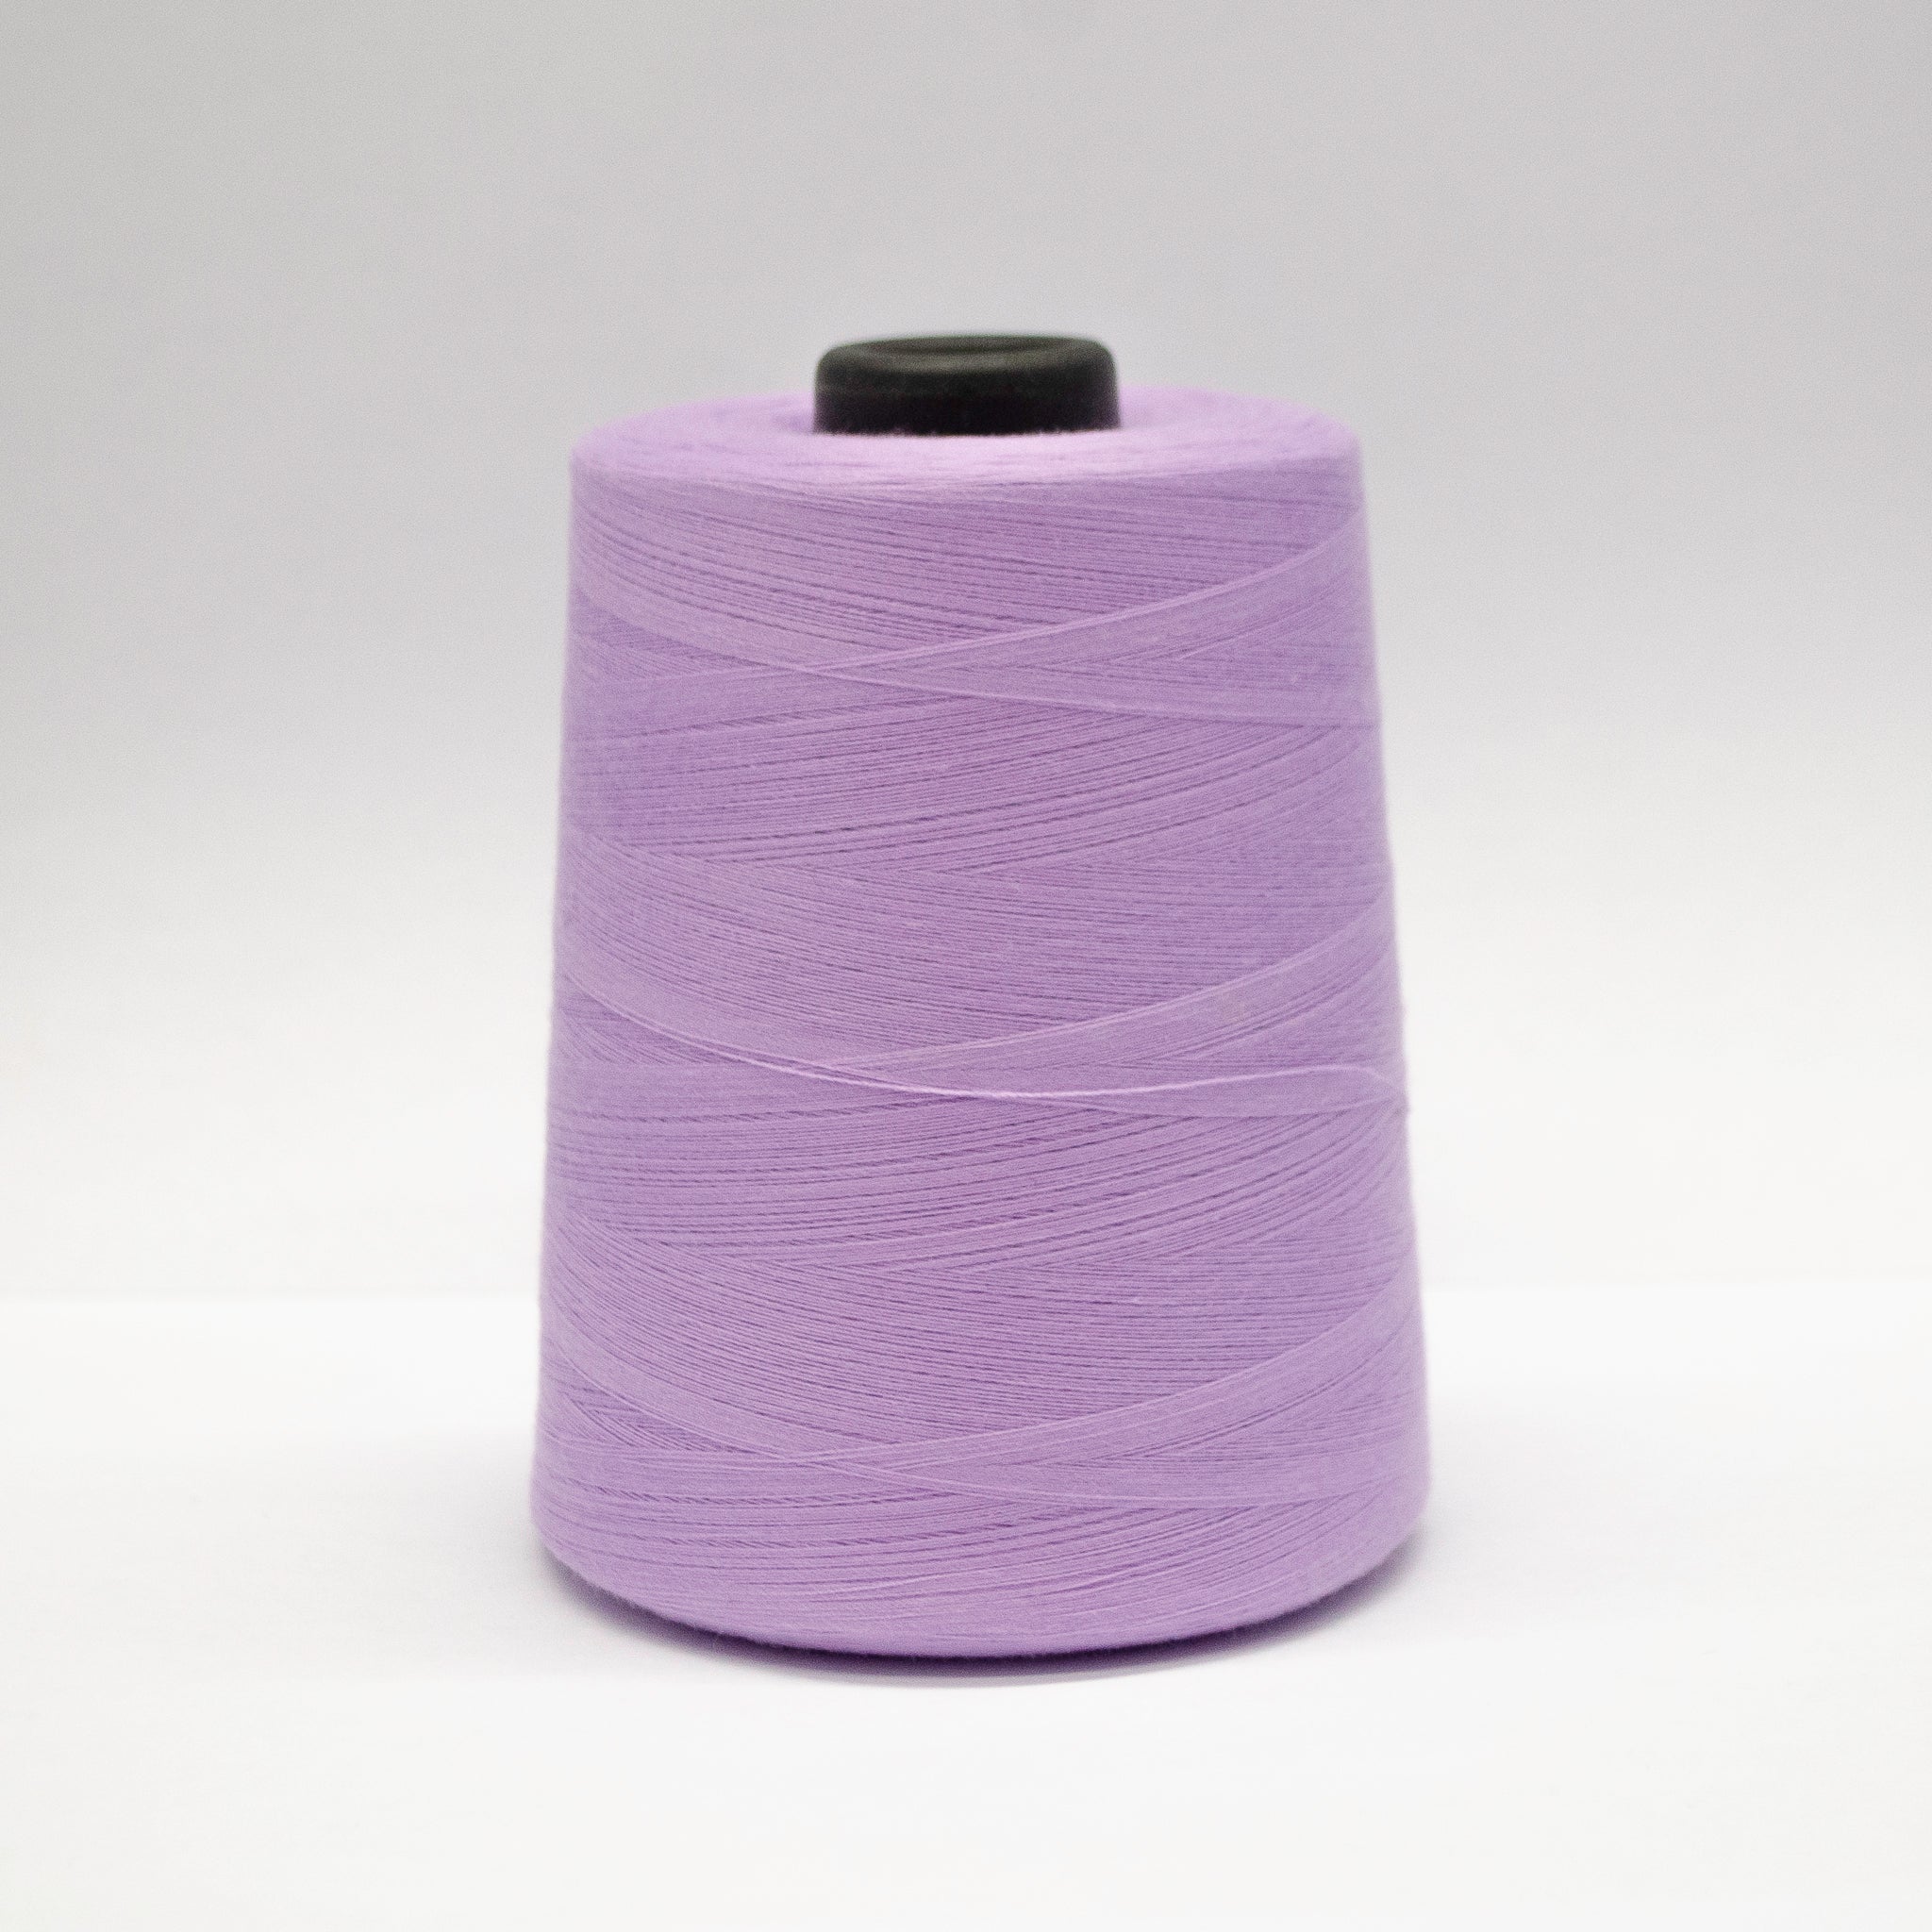 100% Polyester Tex 27 Sewing Thread 10,000 Yards - Light Purple #6137